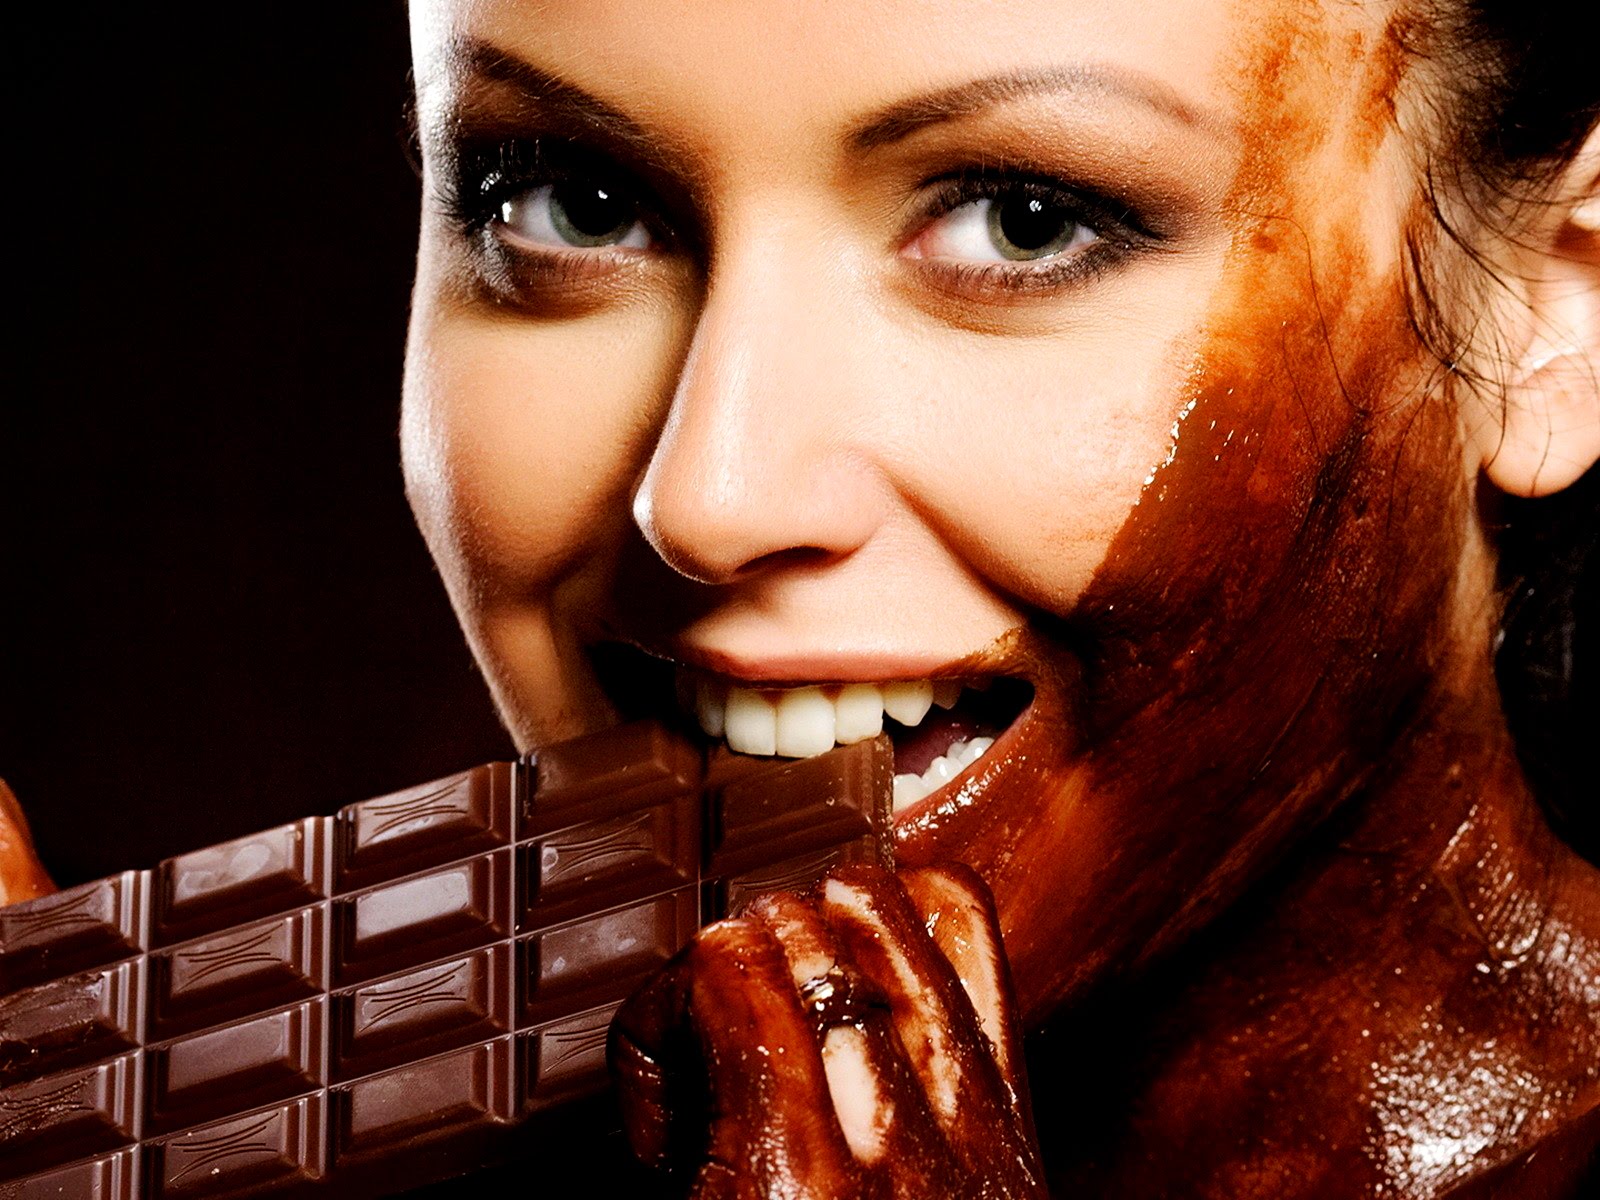 http://3.bp.blogspot.com/-nJOxFyN2ifk/TvGj9v-htUI/AAAAAAAACes/9dUeXWqXMR8/s1600/Girl_Eating_Chocolate_HD_Wallpaper-Vvallpaper.N